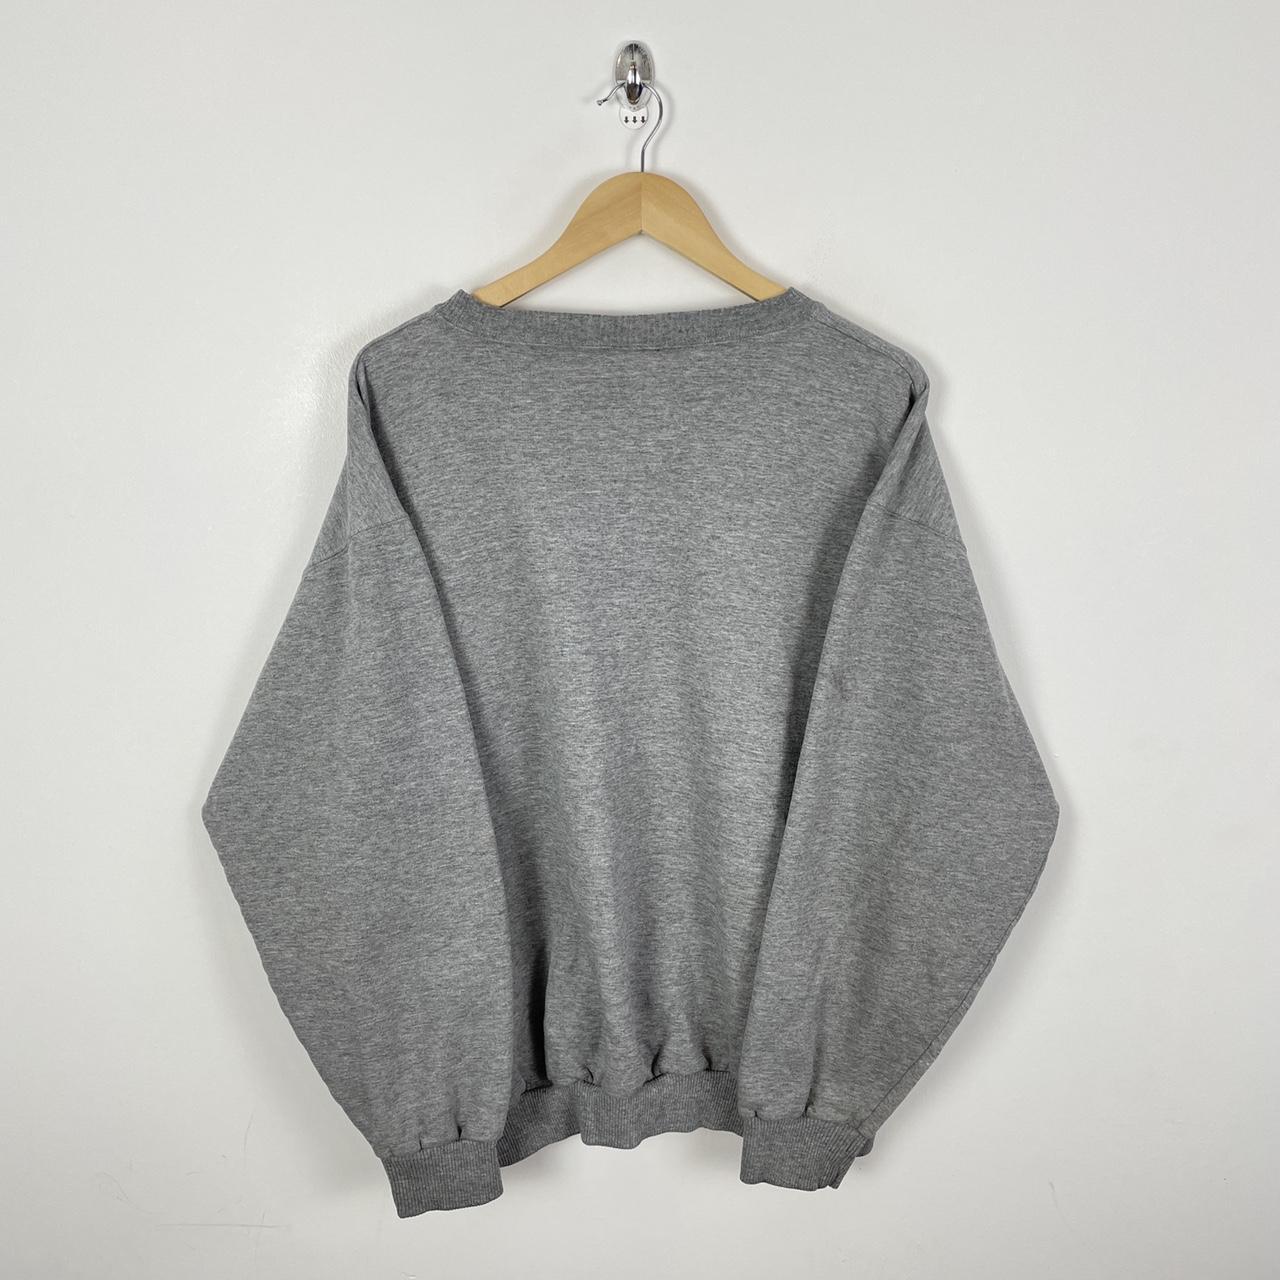 Vintage 90s USA University Printed Sweatshirt Grey... - Depop